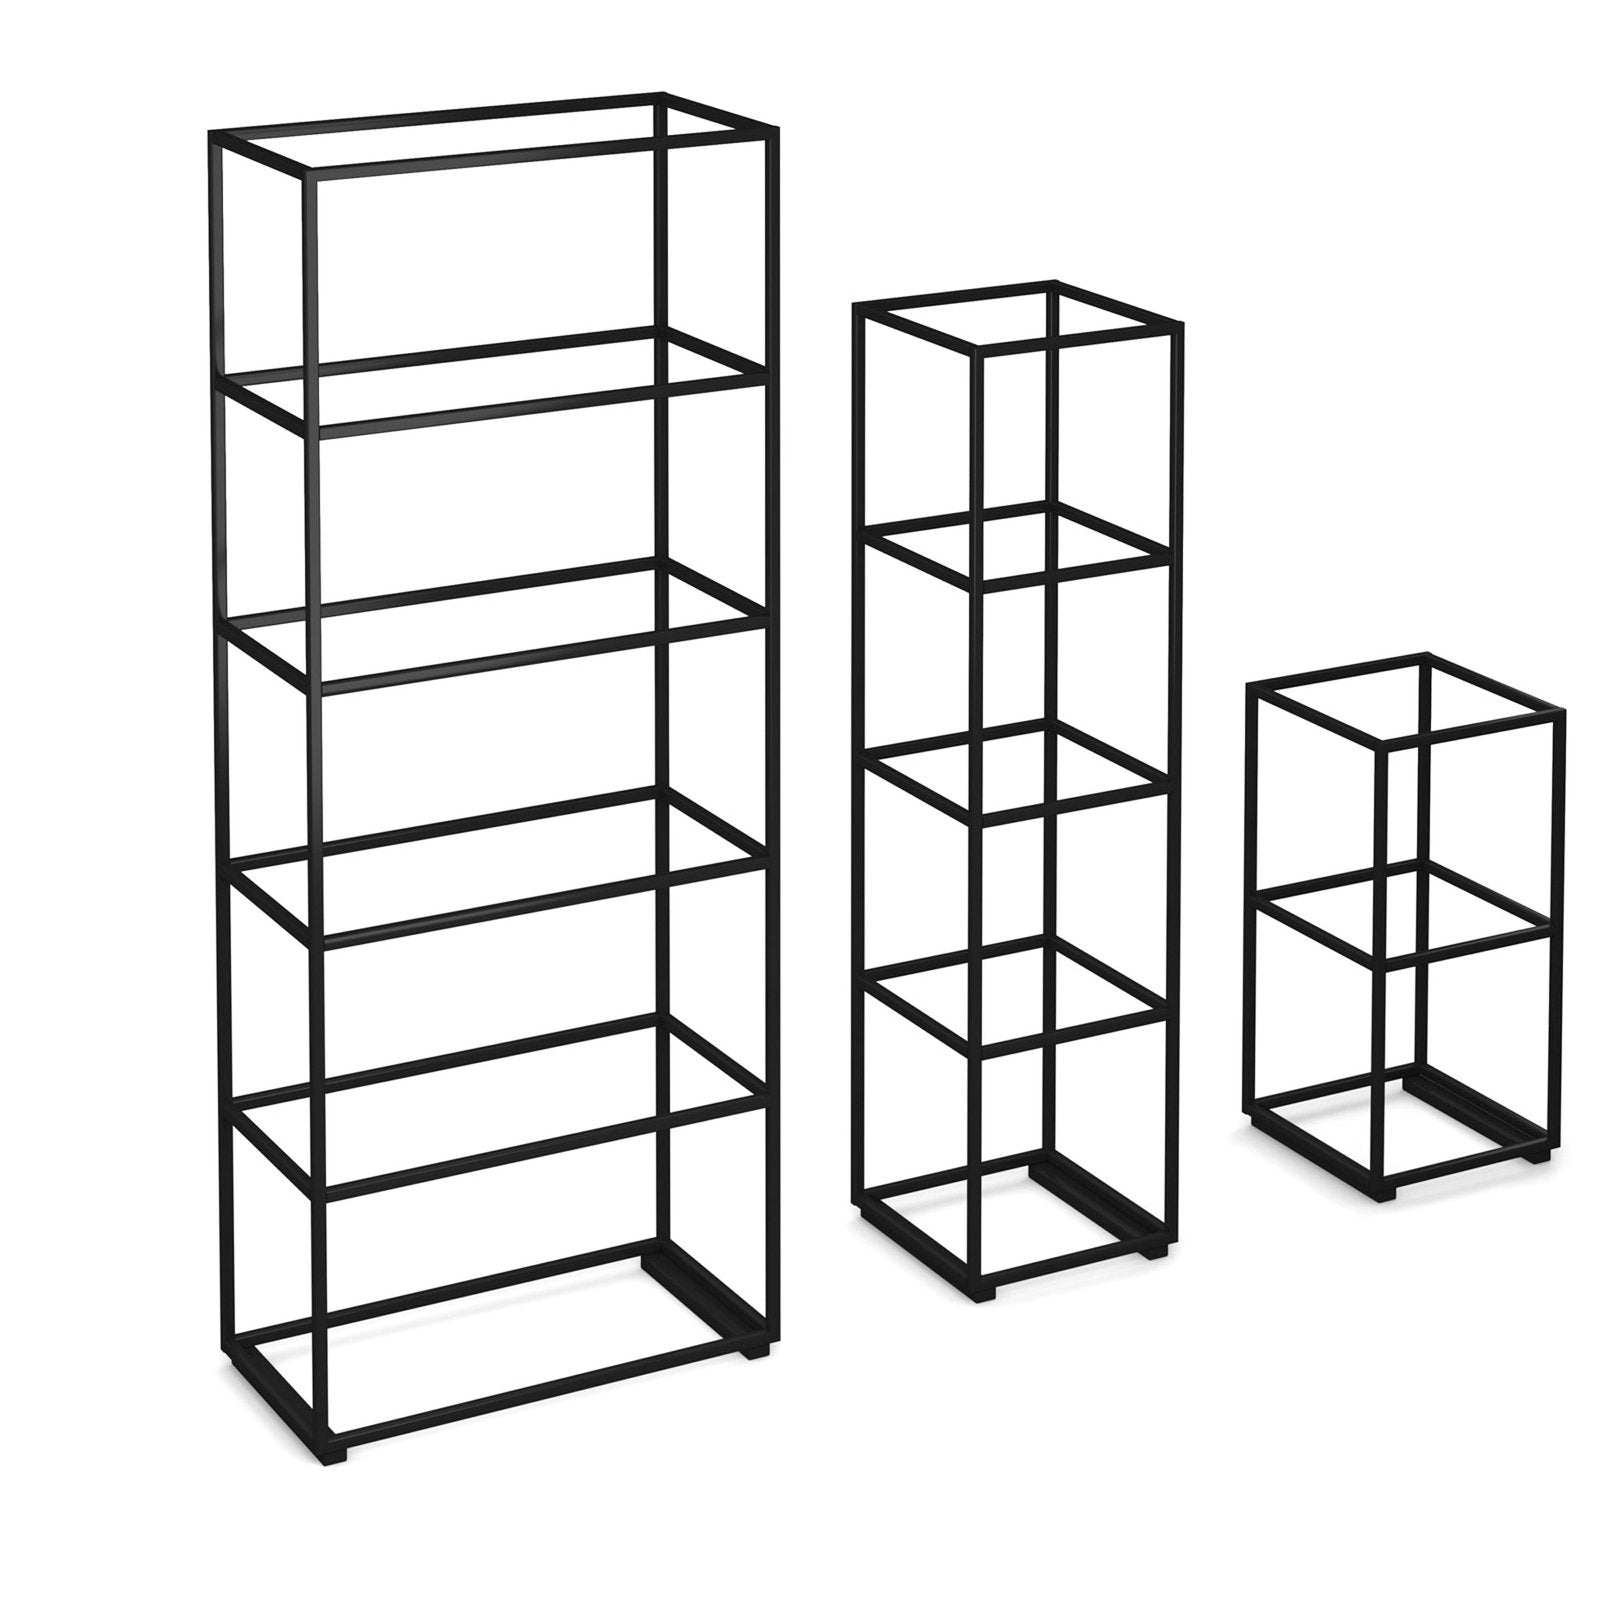 Flux modular storage unit - Office Products Online